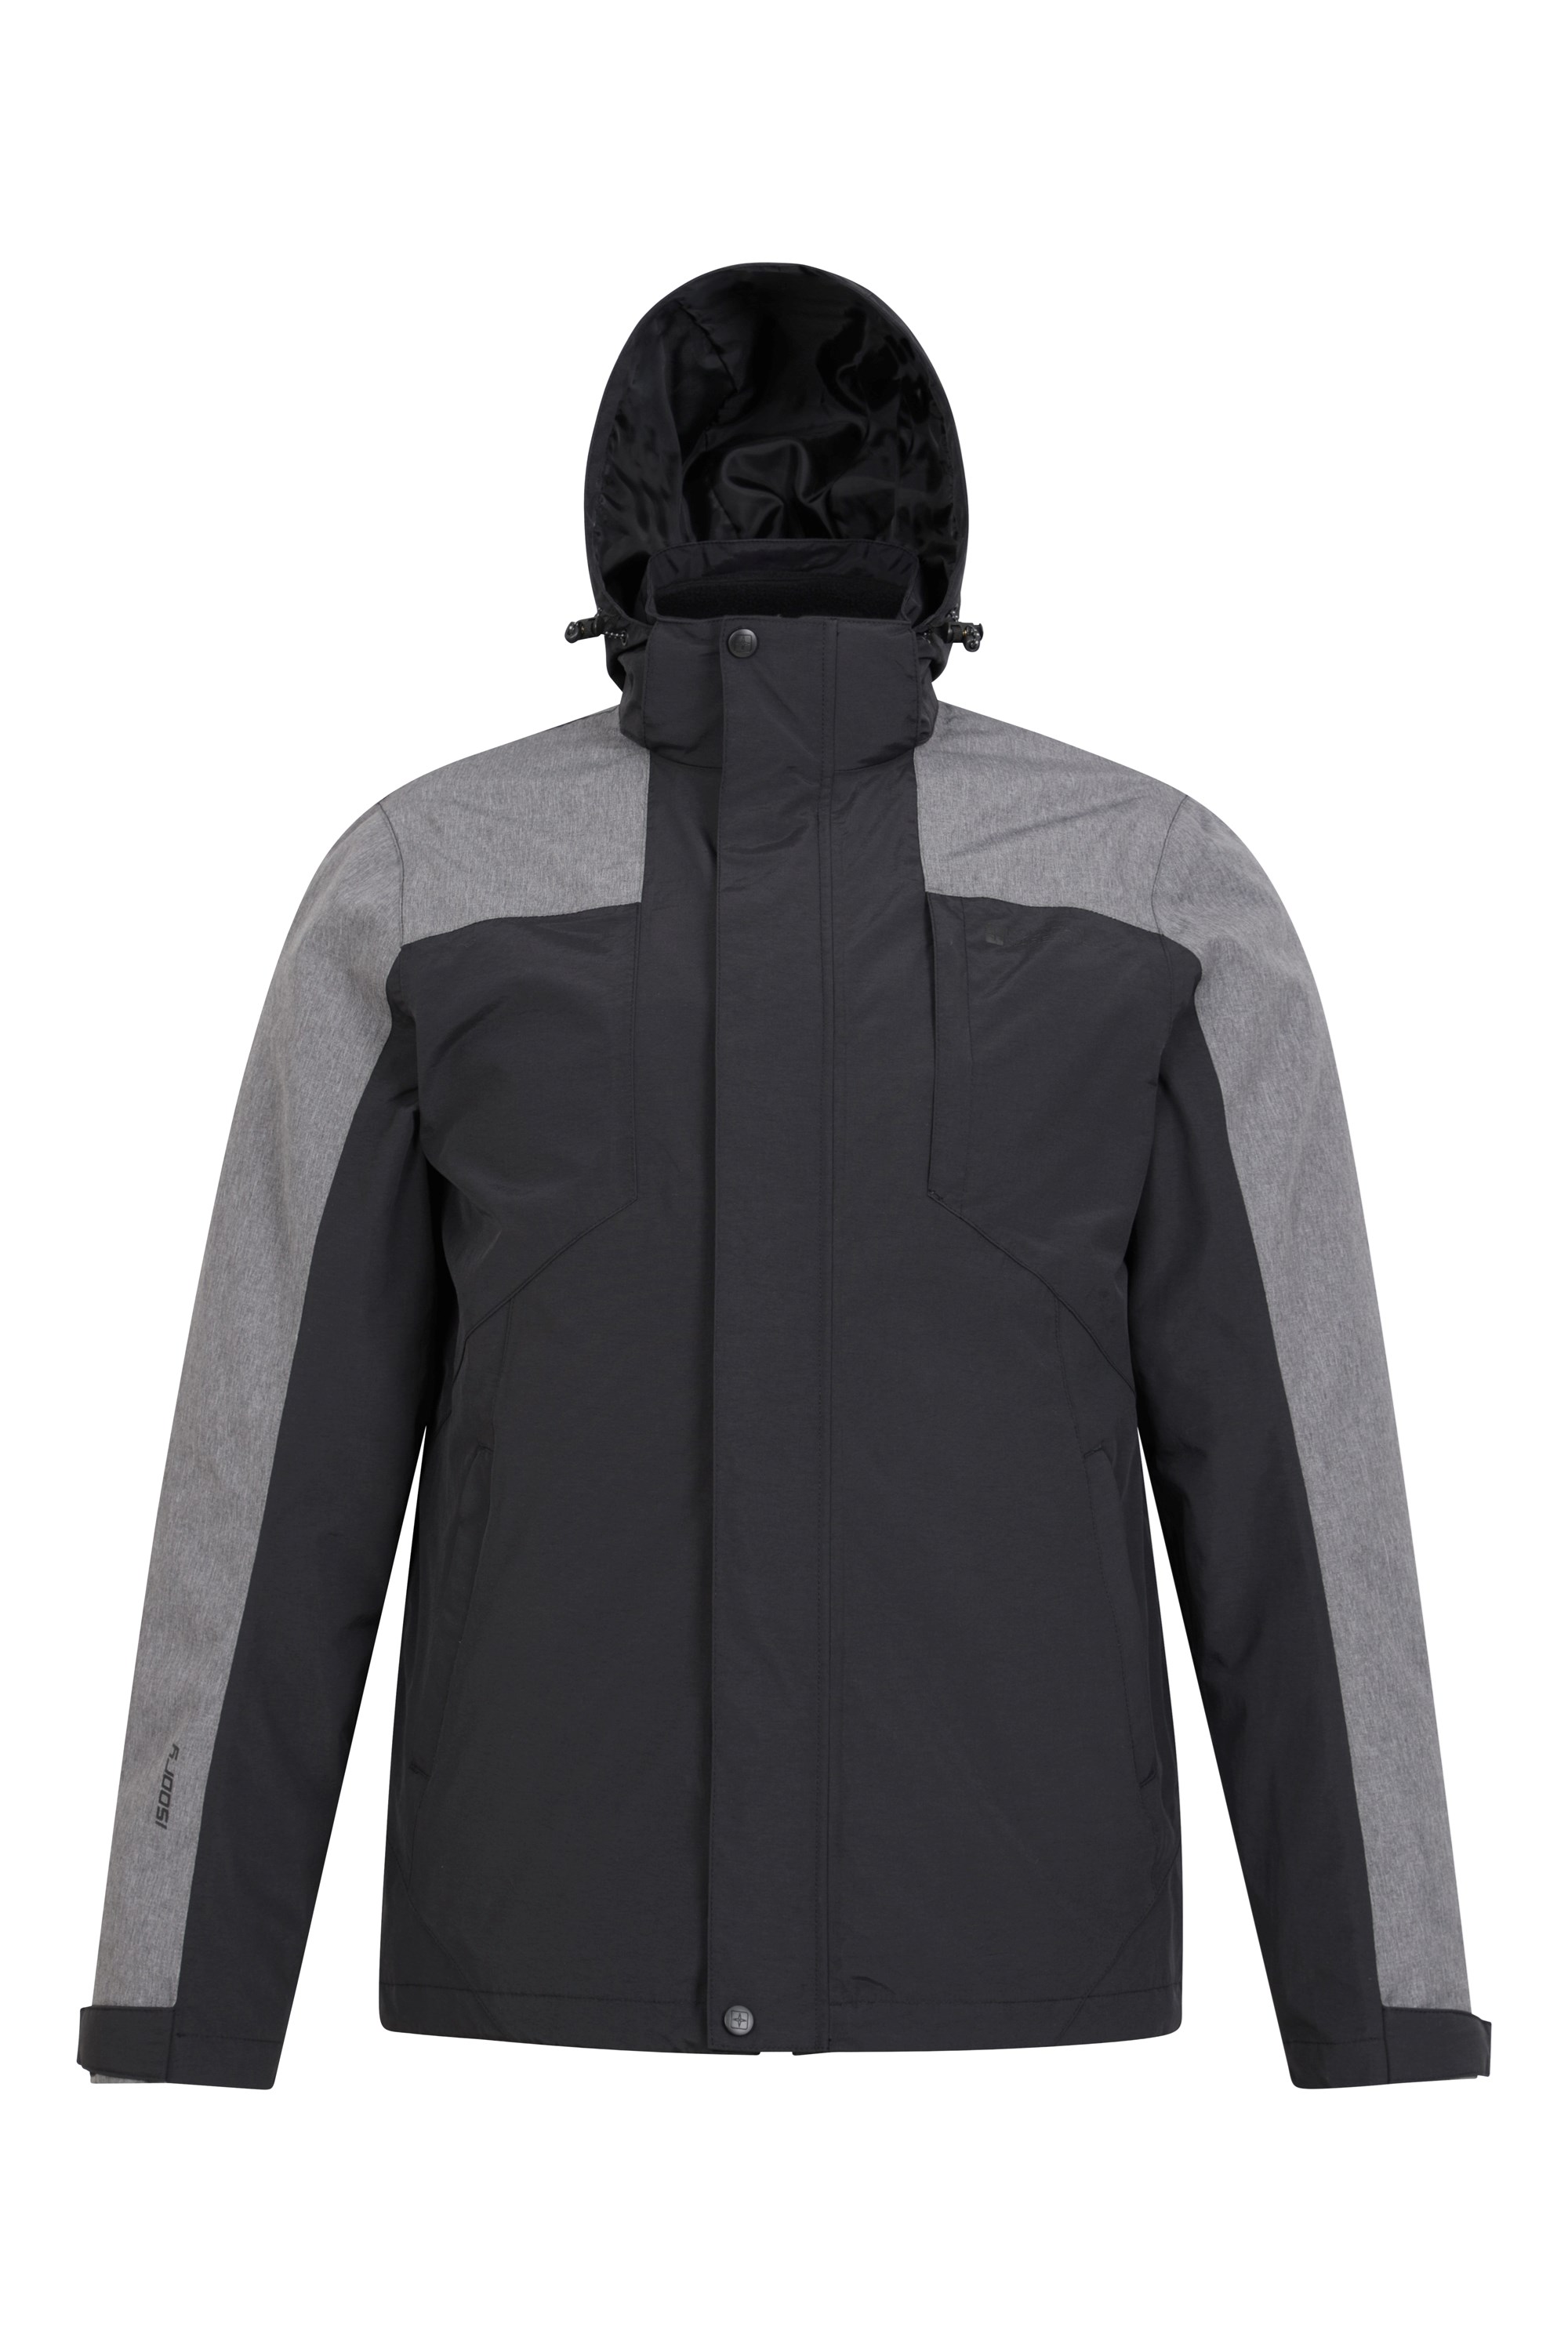 Mountain Warehouse Black Bracken Extreme 3 In 1 Mens Waterproof Jacket